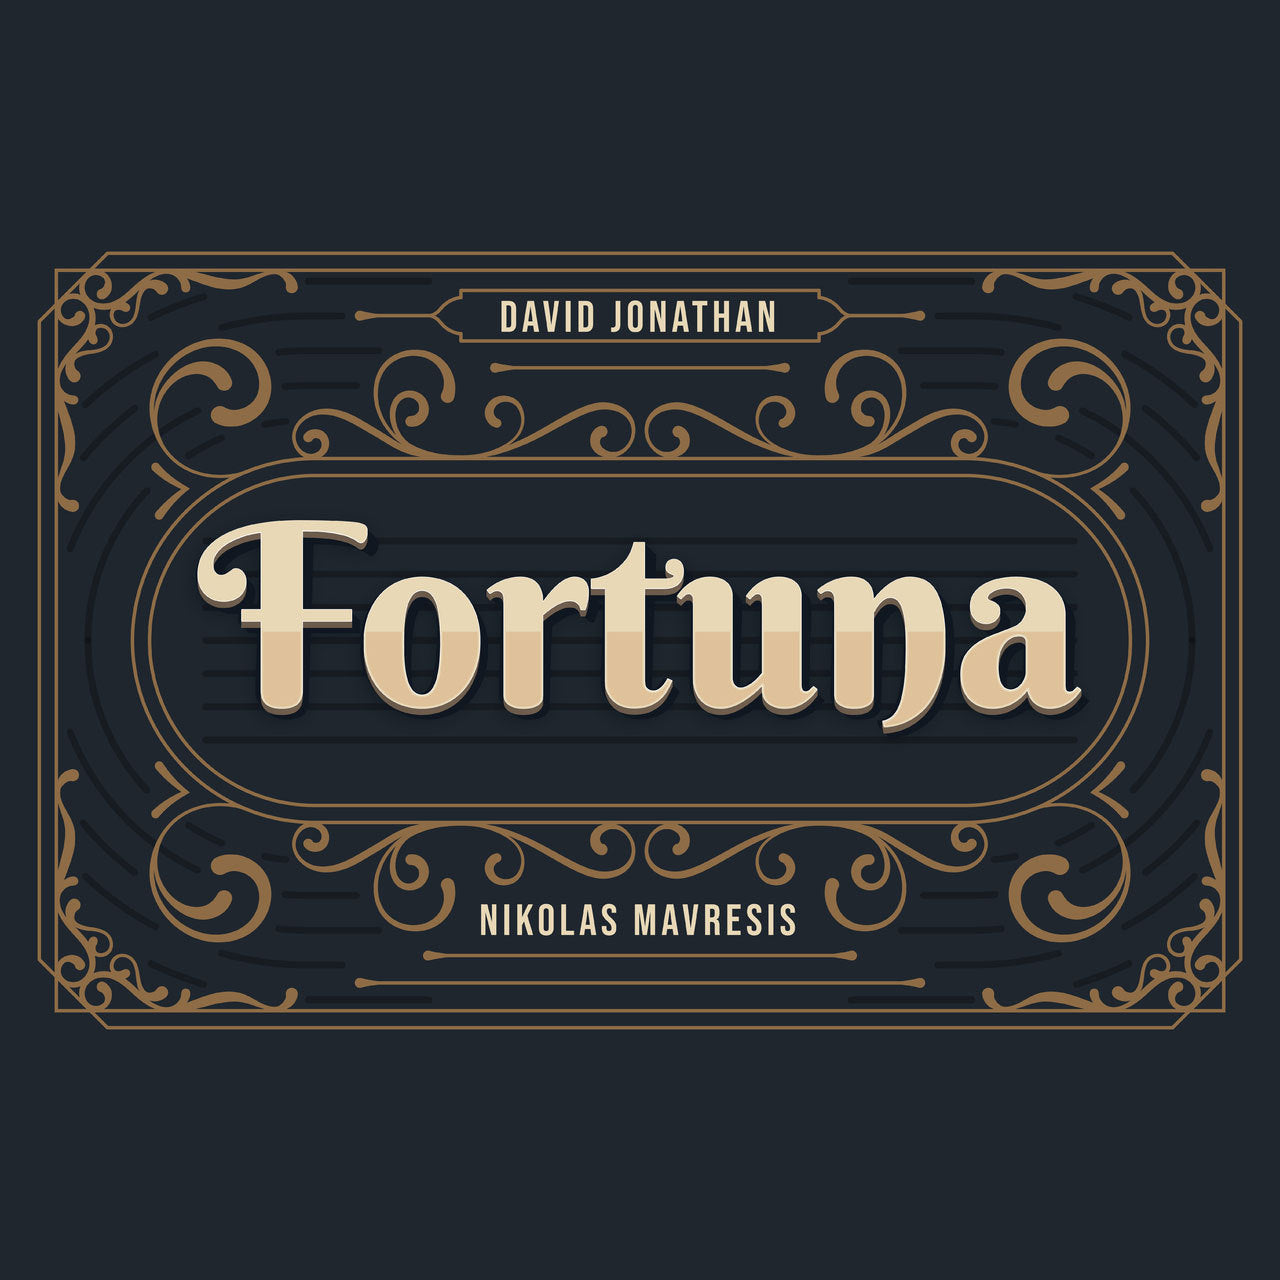 Fortuna by David Jonathan and Nikolas Mavresis